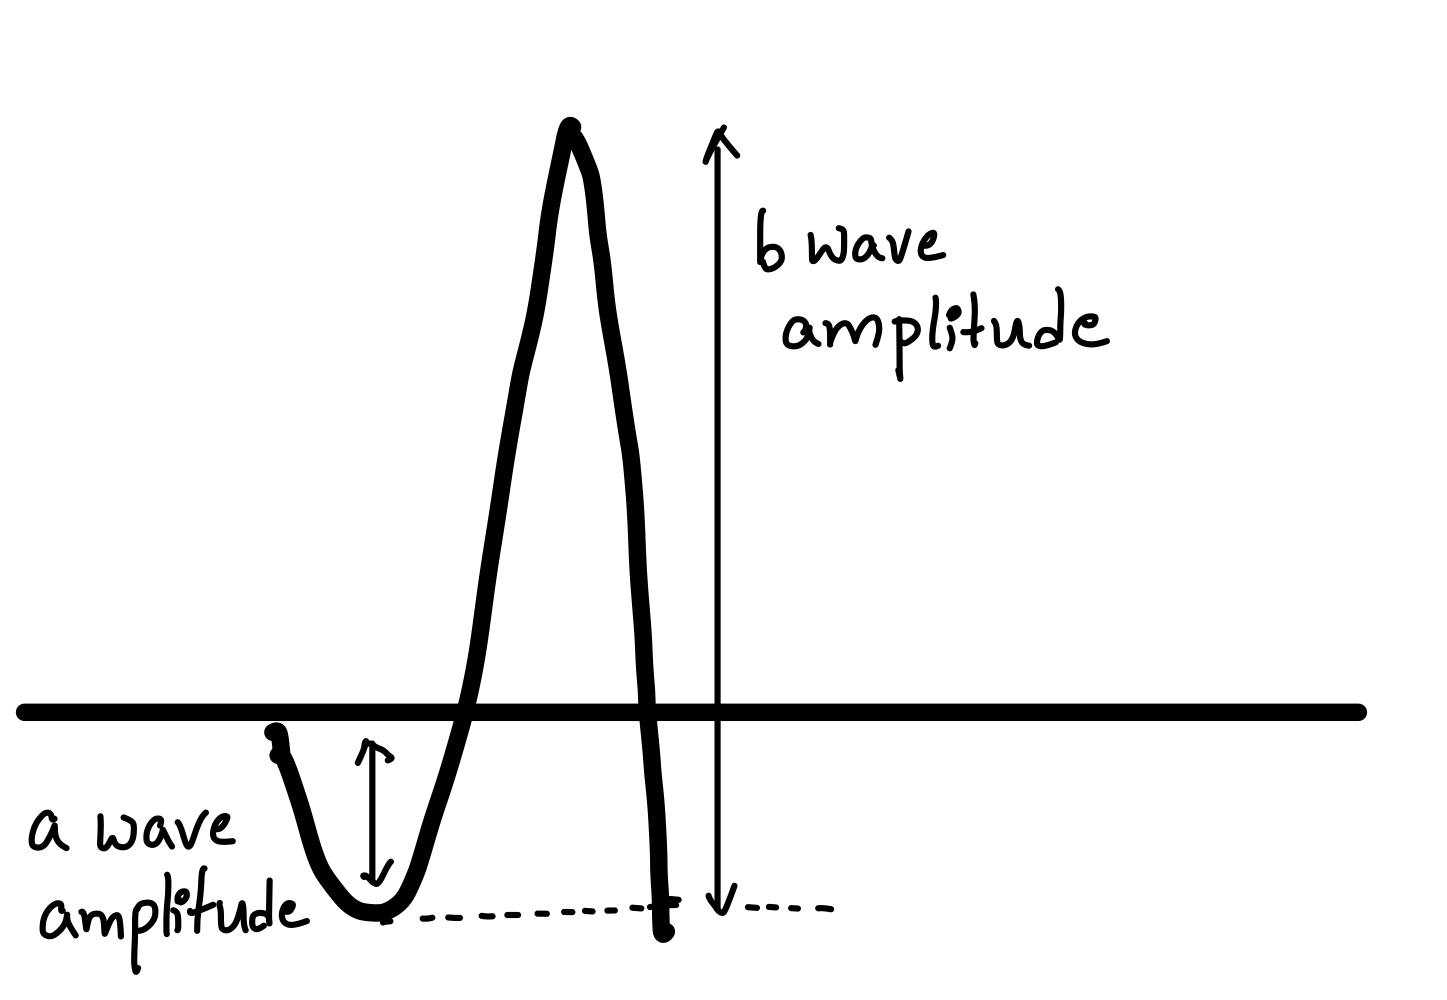 Amplitude of ERG waves